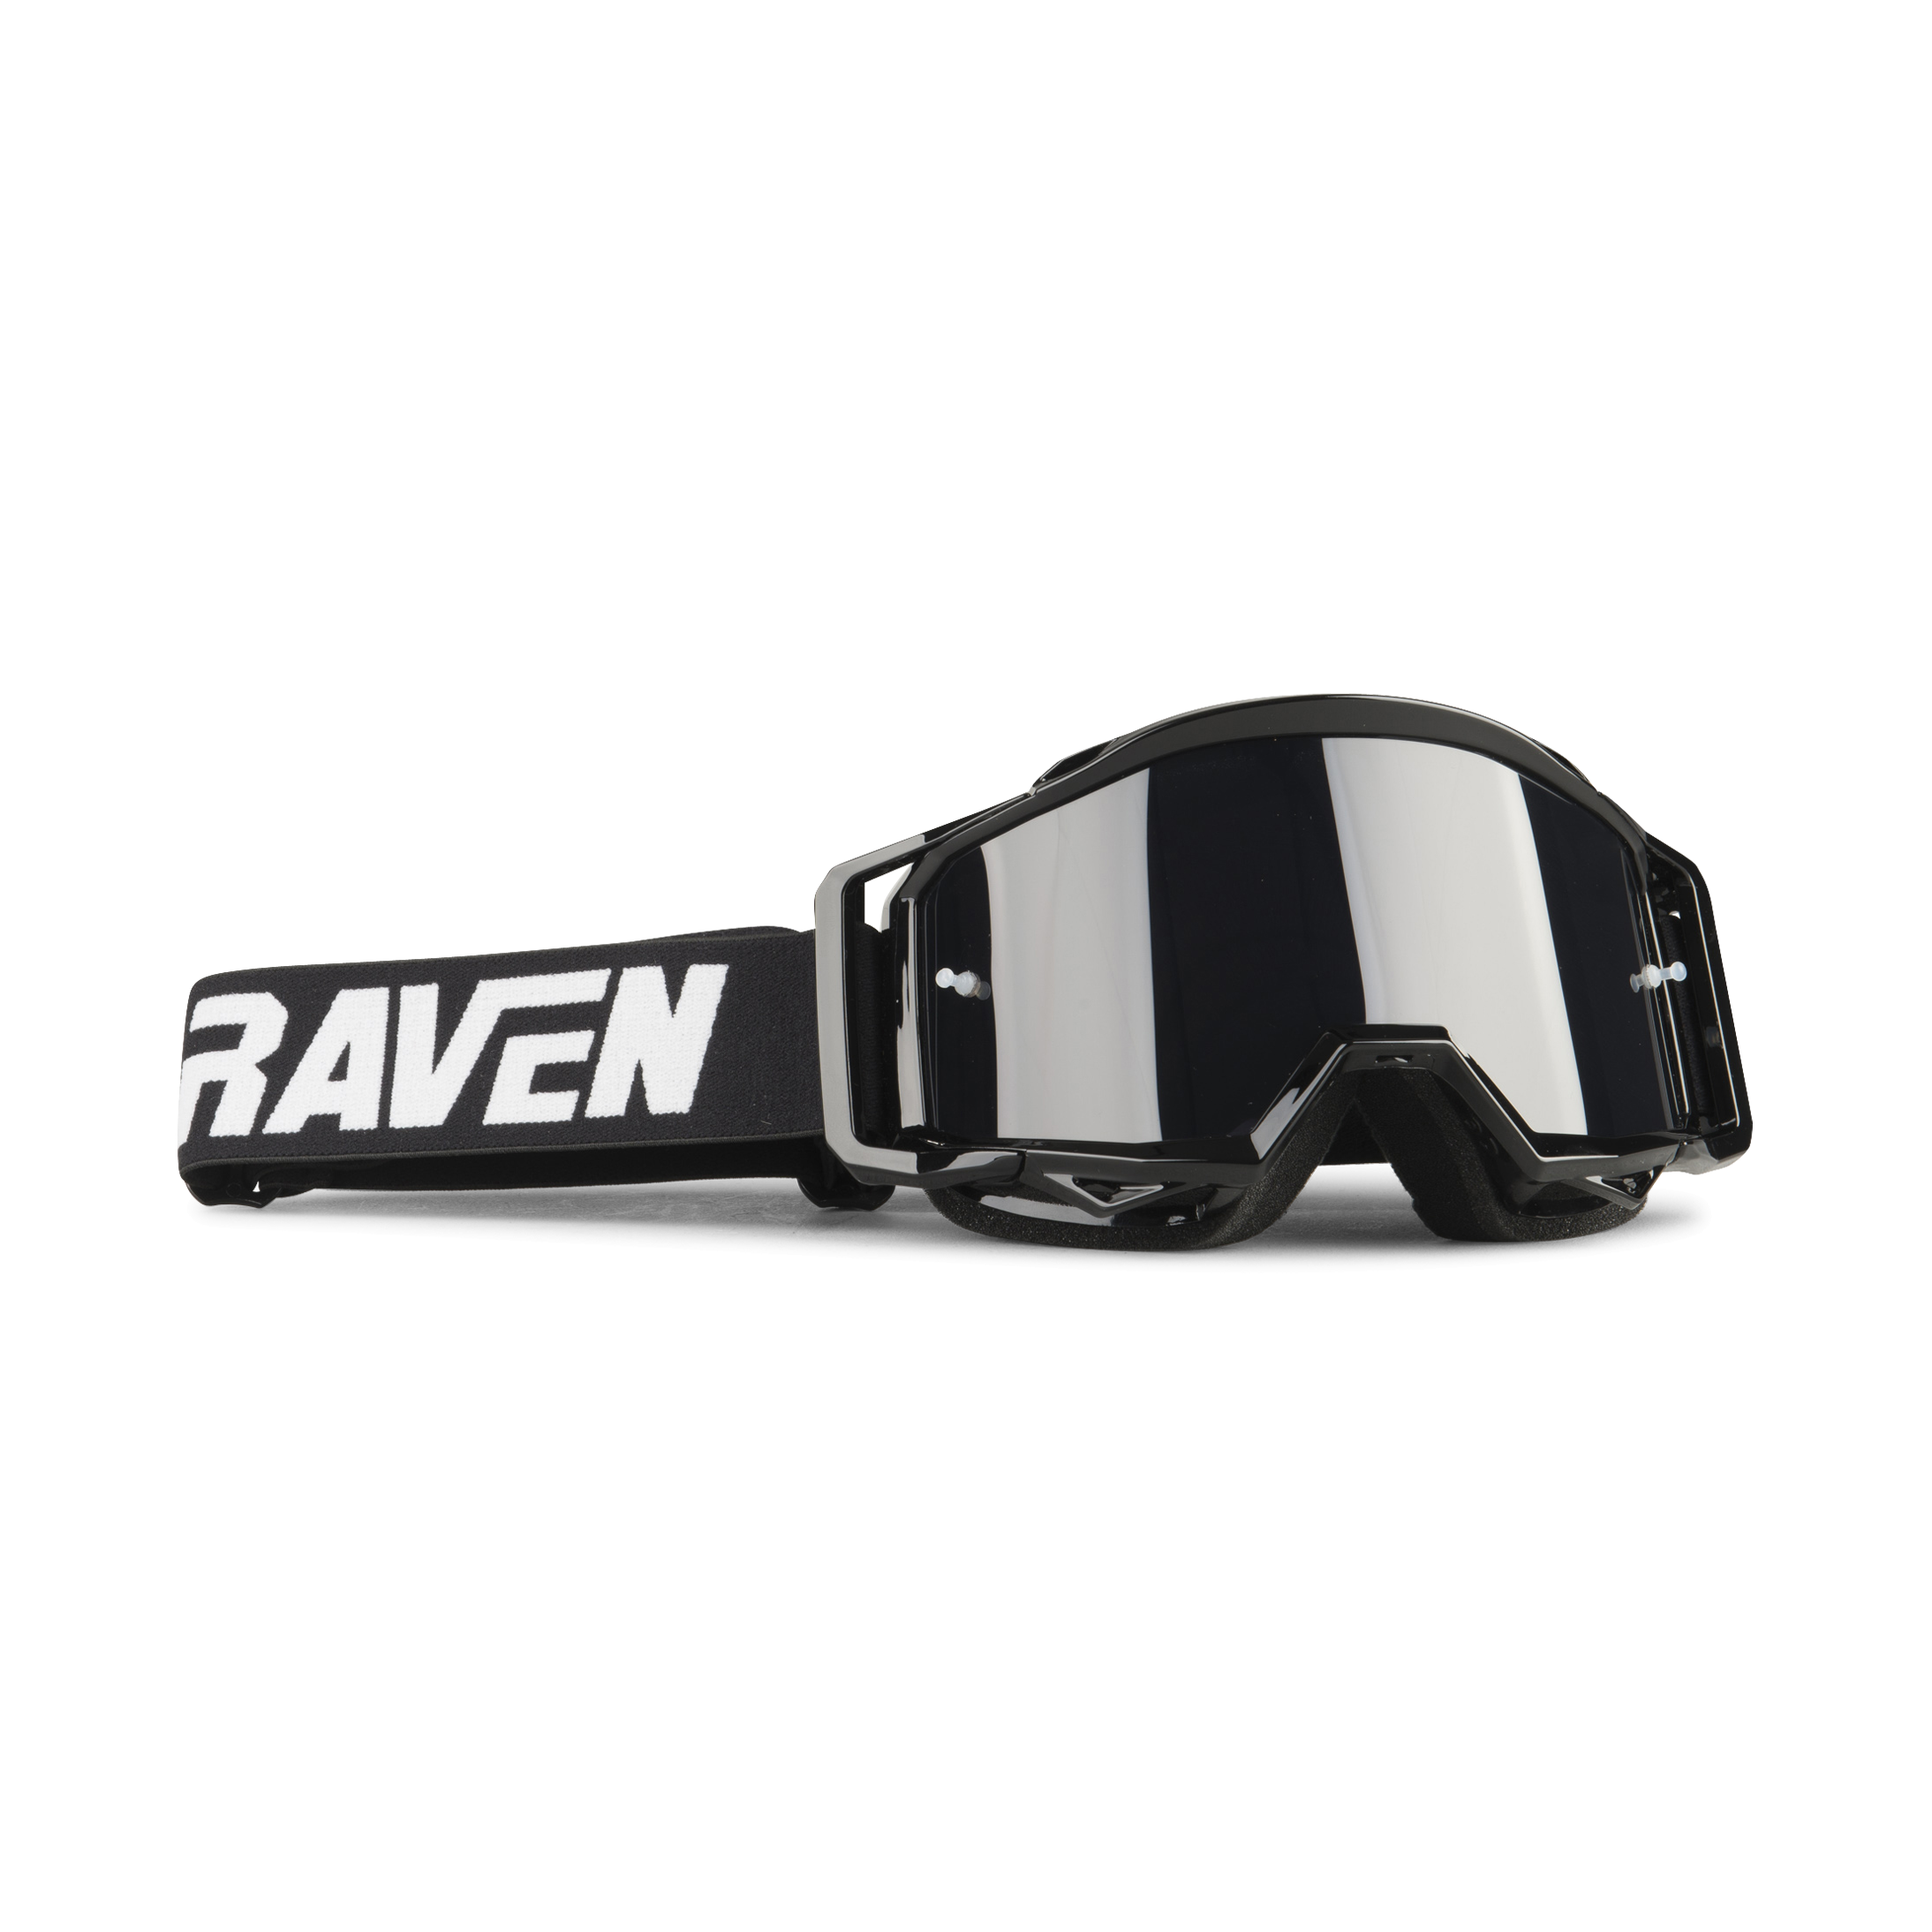 Masque caméra embarquée sport extrême lunettes Cross Ski micro sd hd 720p  noir